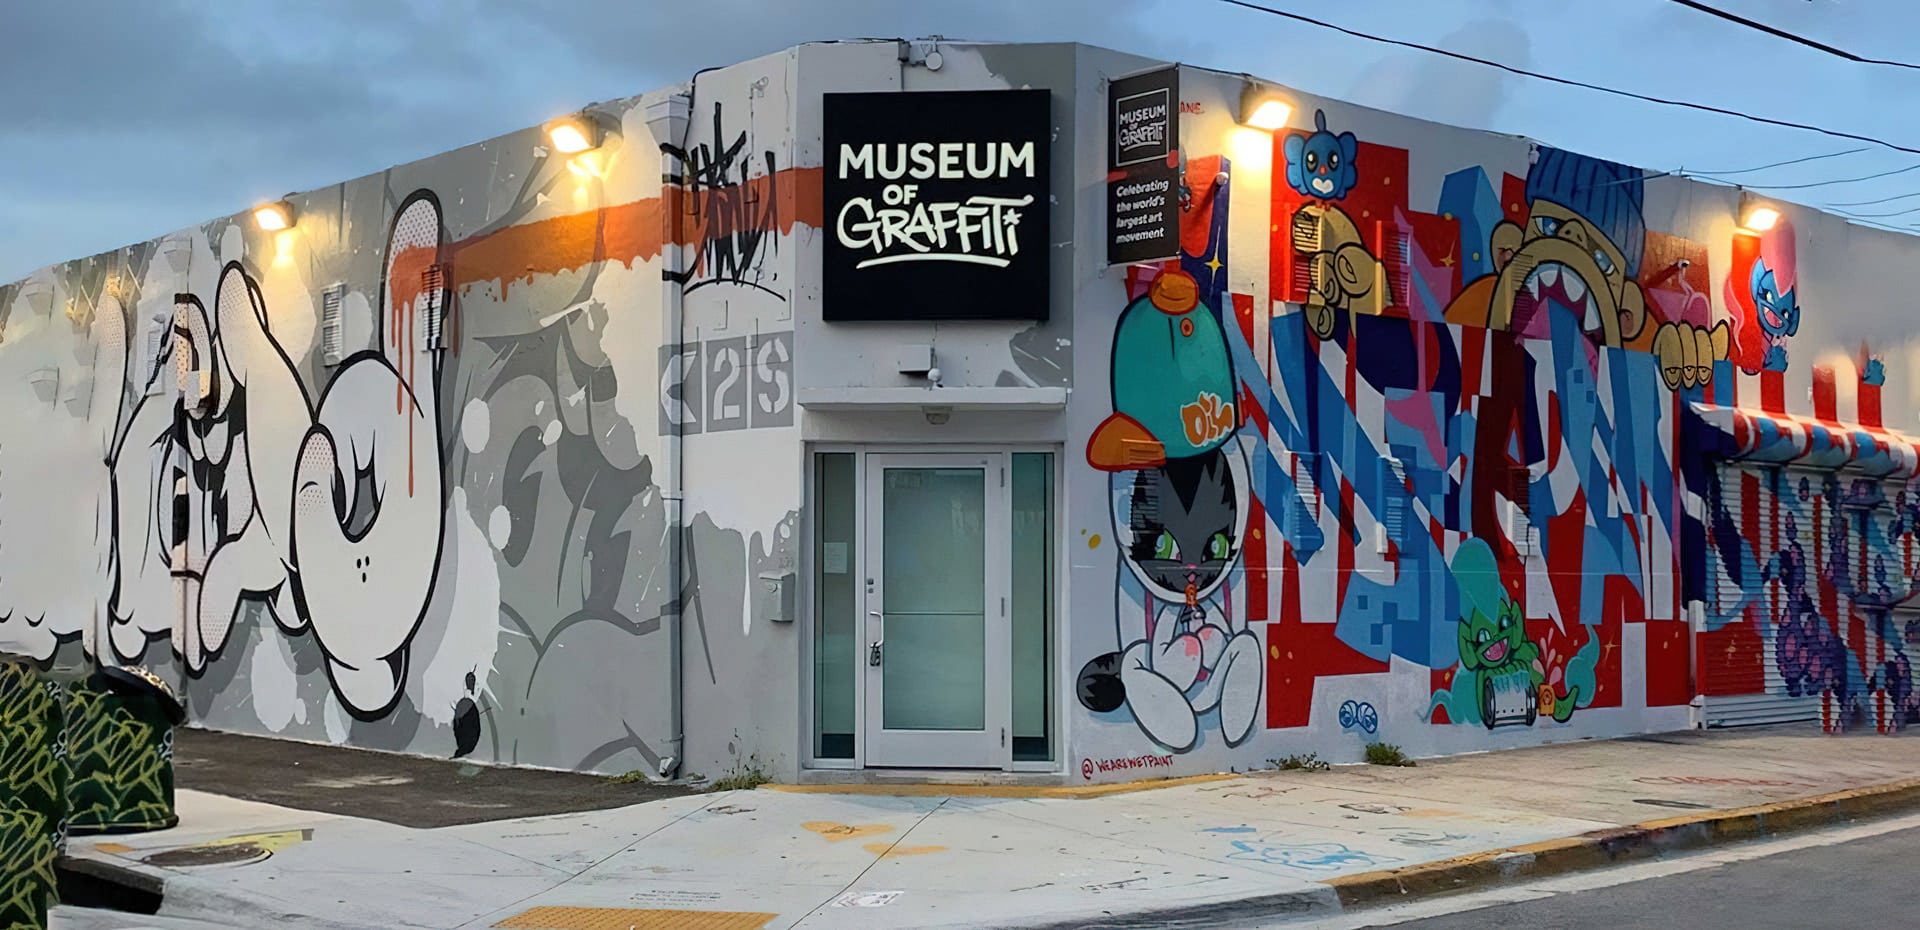 Image Of The Museum of Graffiti